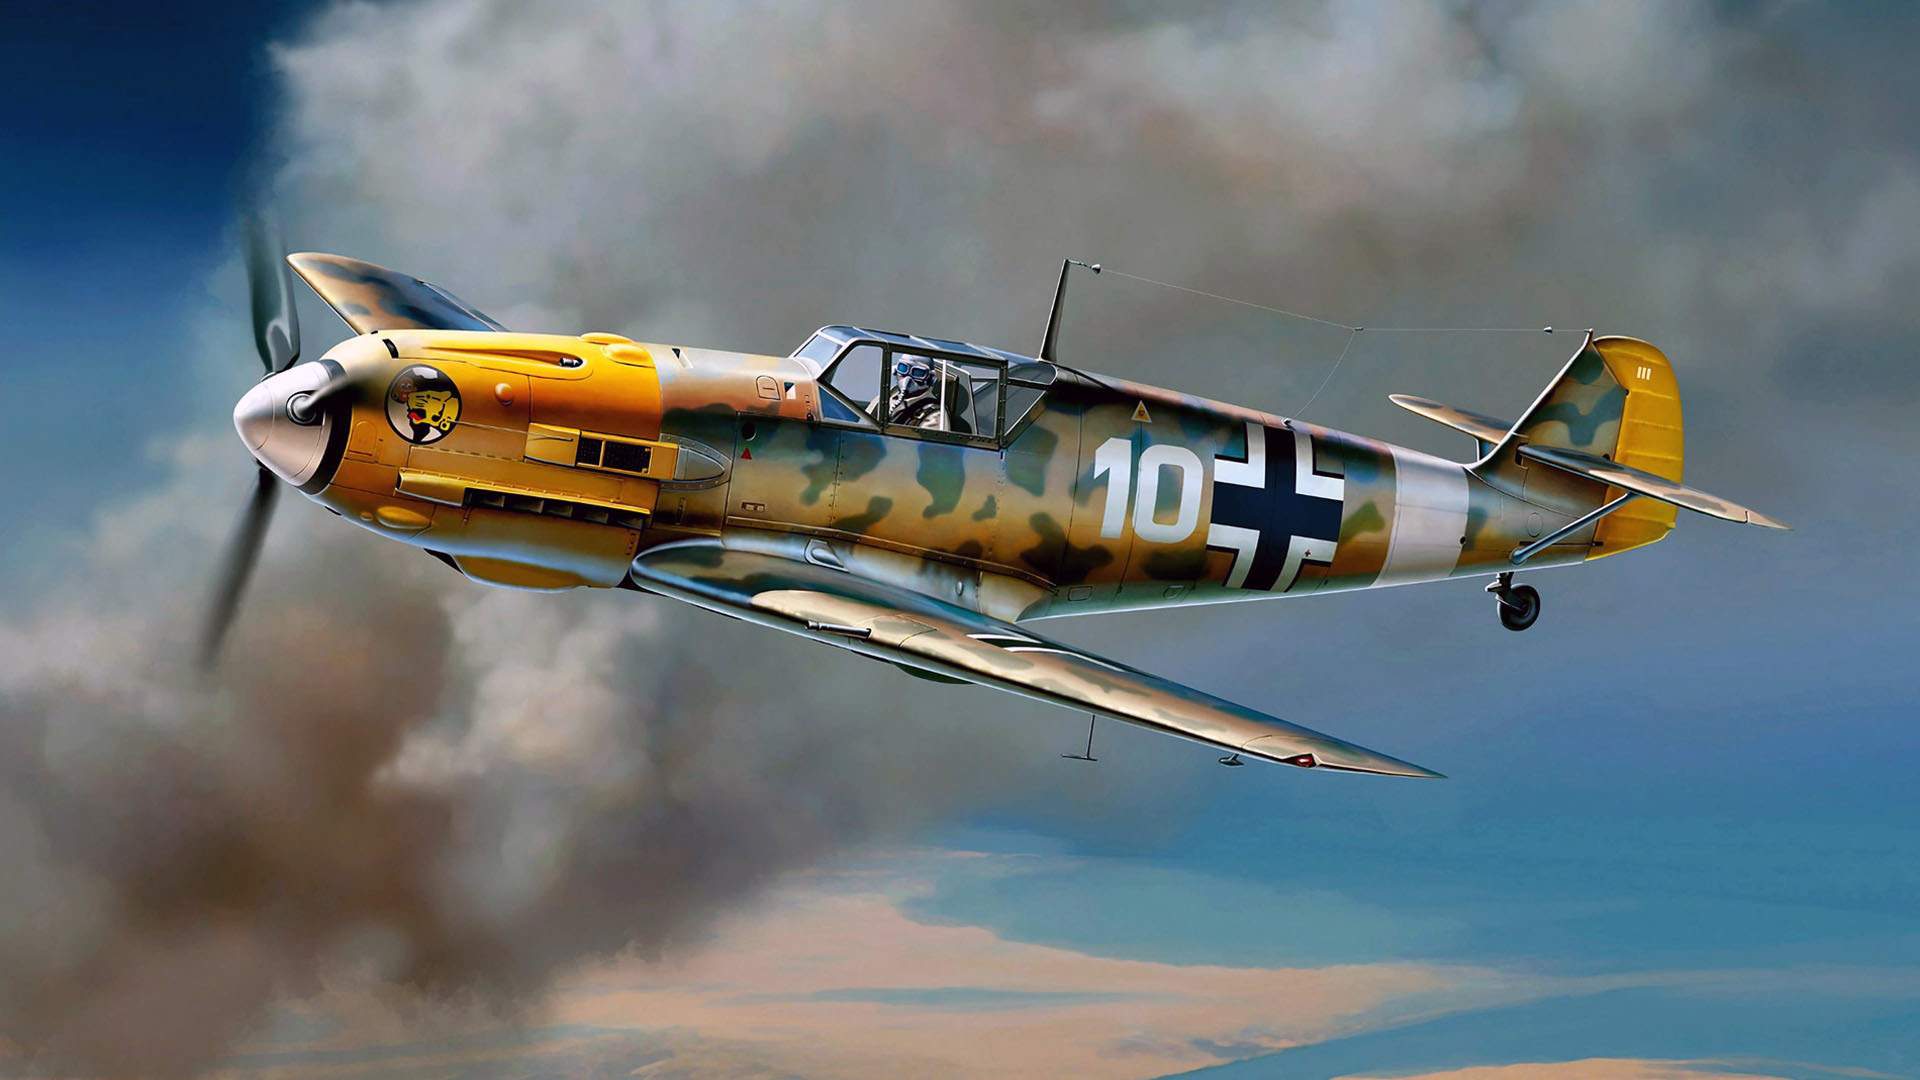 Desktop Wallpaper Messerschmitt Bf 109 Military Plane, Hd Image, Picture,  Background, Mom1za